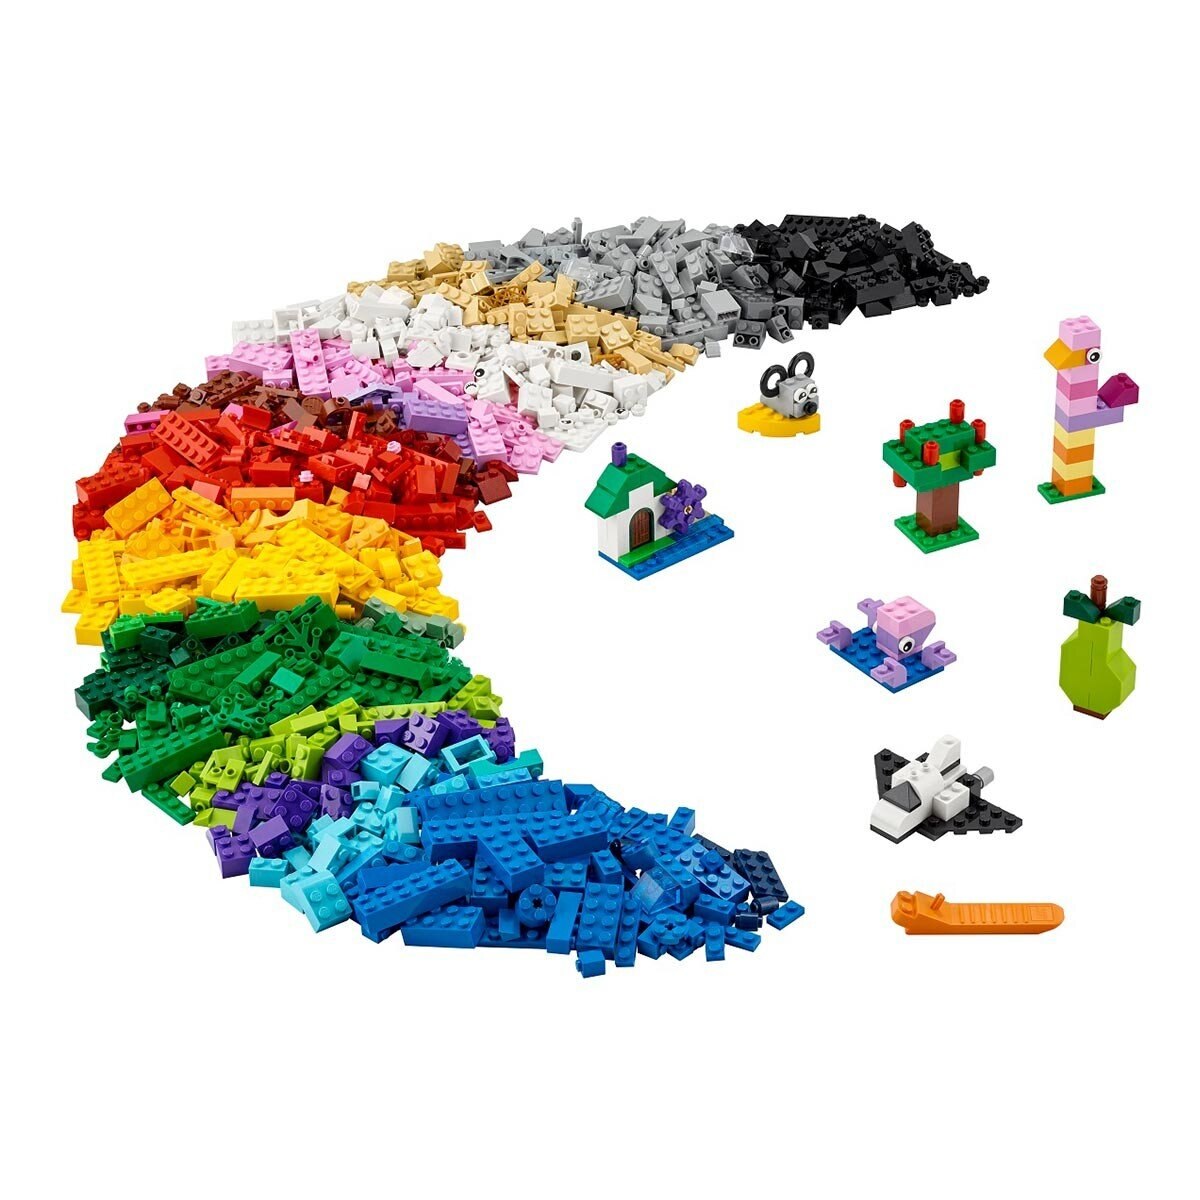 Lego 經典系列積木創意盒 11016